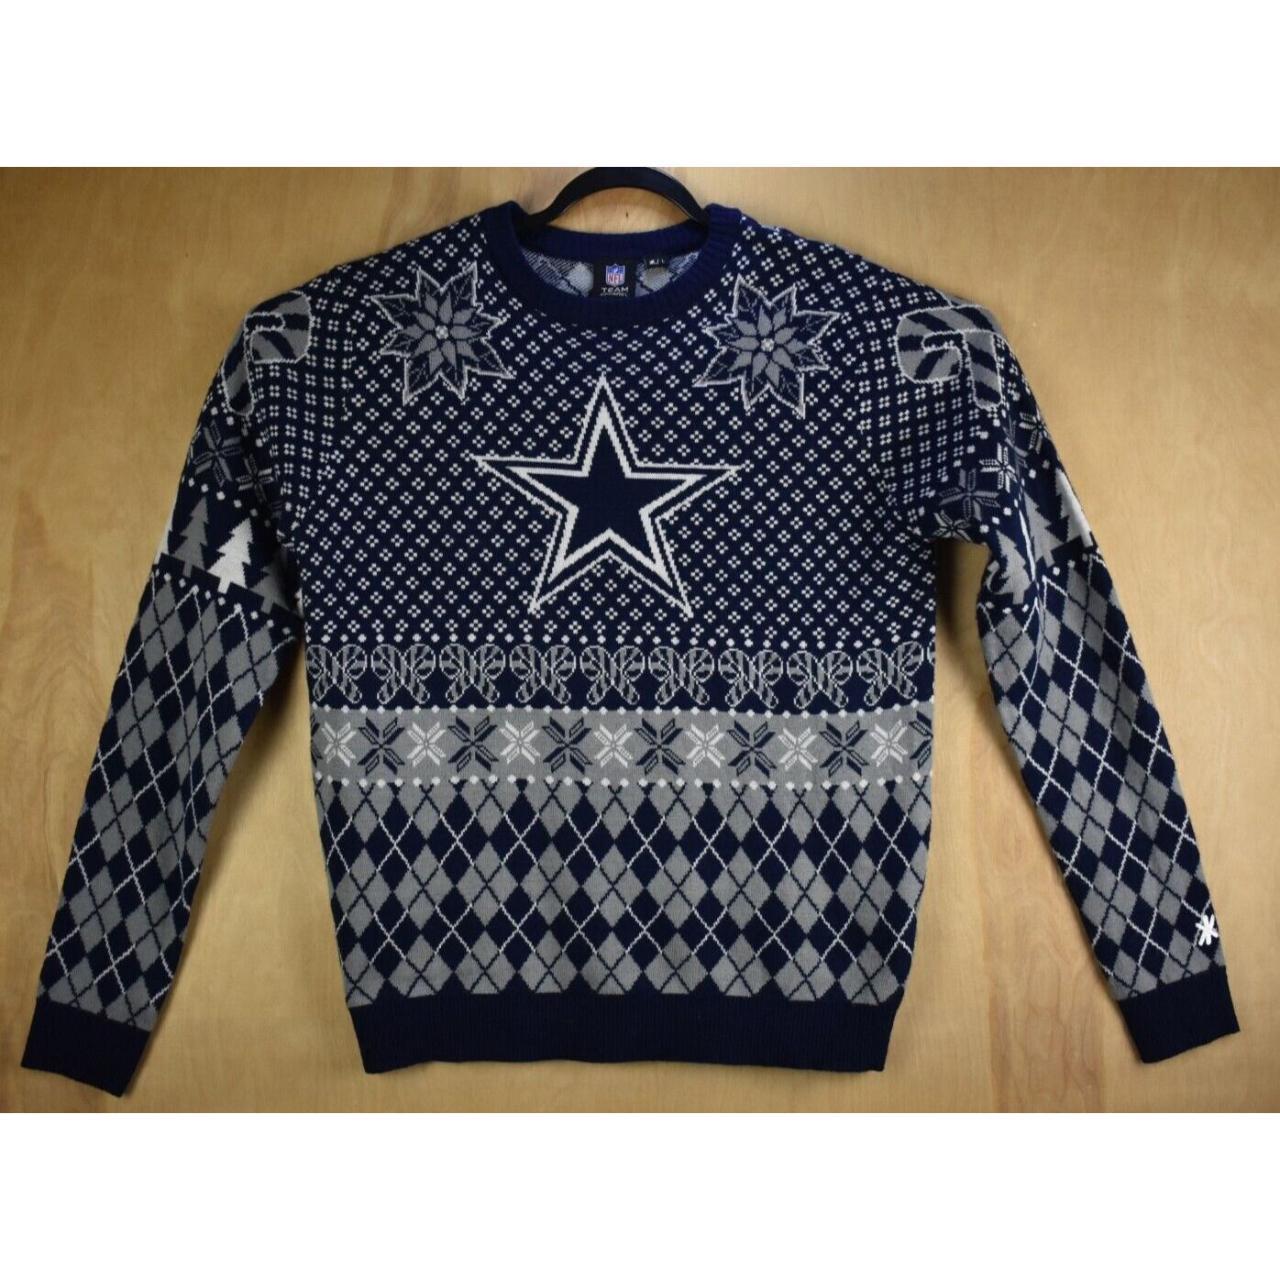 Christmas Dallas Cowboys sweater. Super soft and - Depop